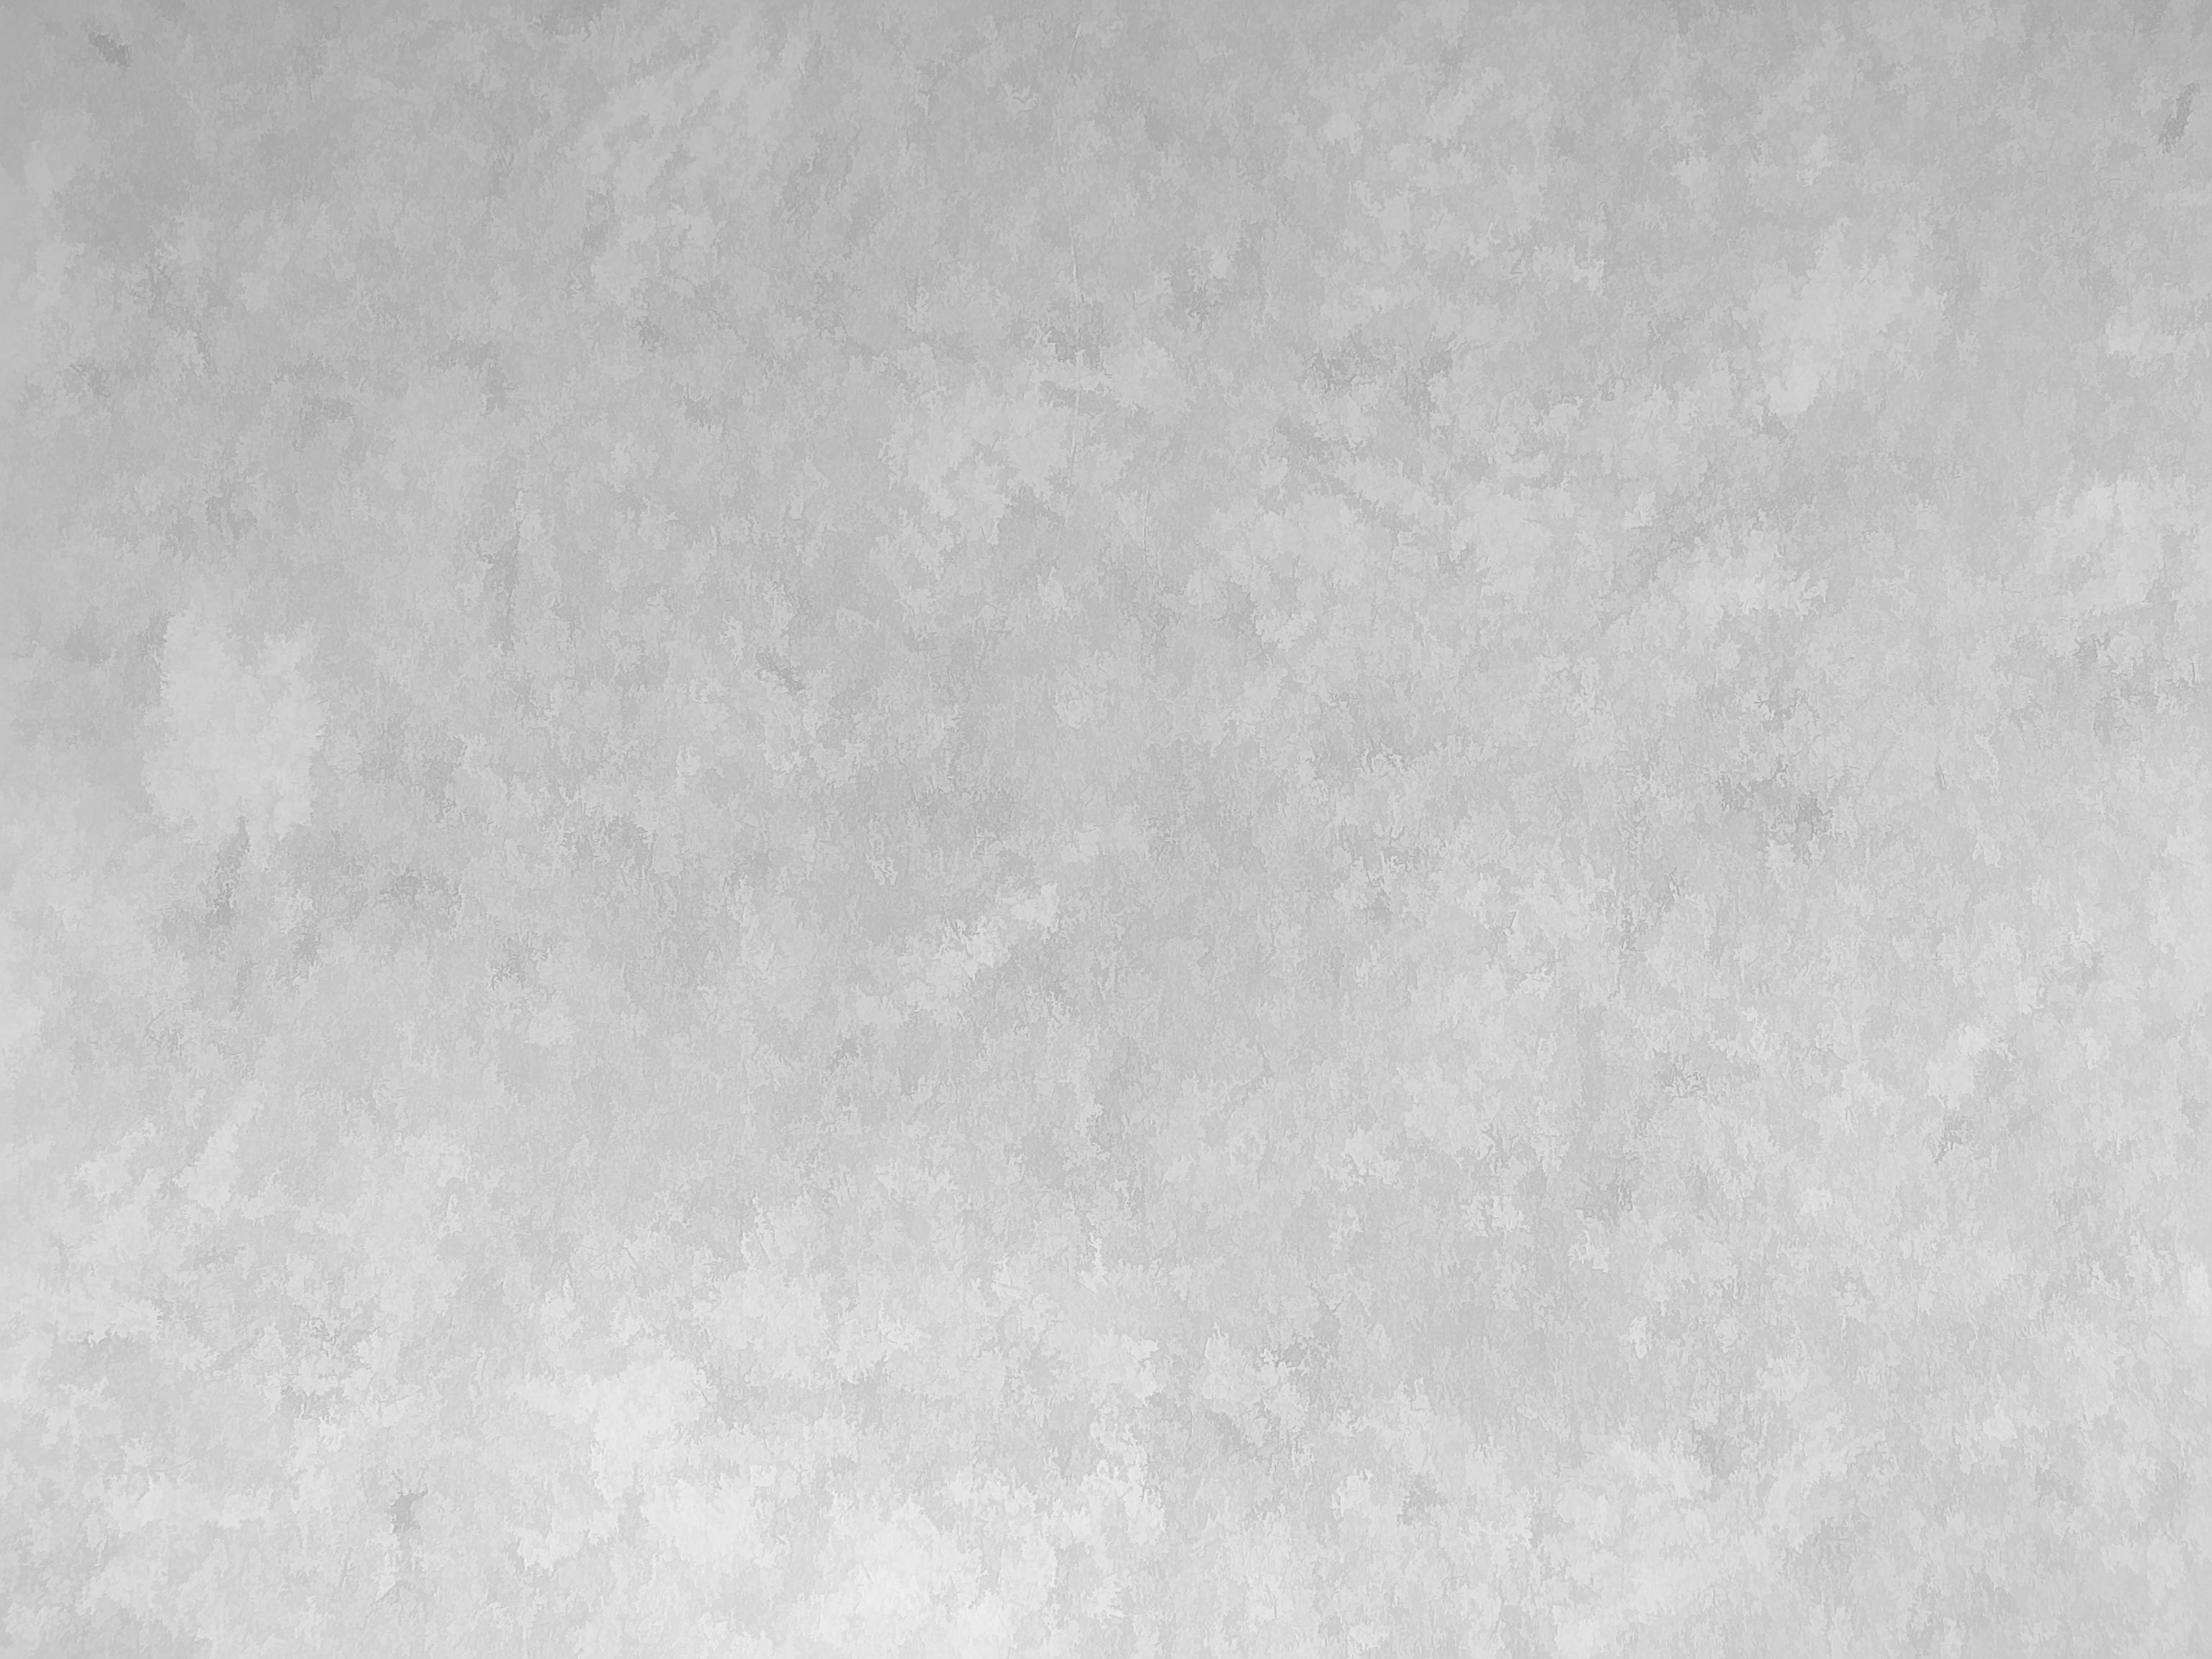 hd-wallpapers-grey-and-white-wallpaper-3072x2304-wallpaper.jpg